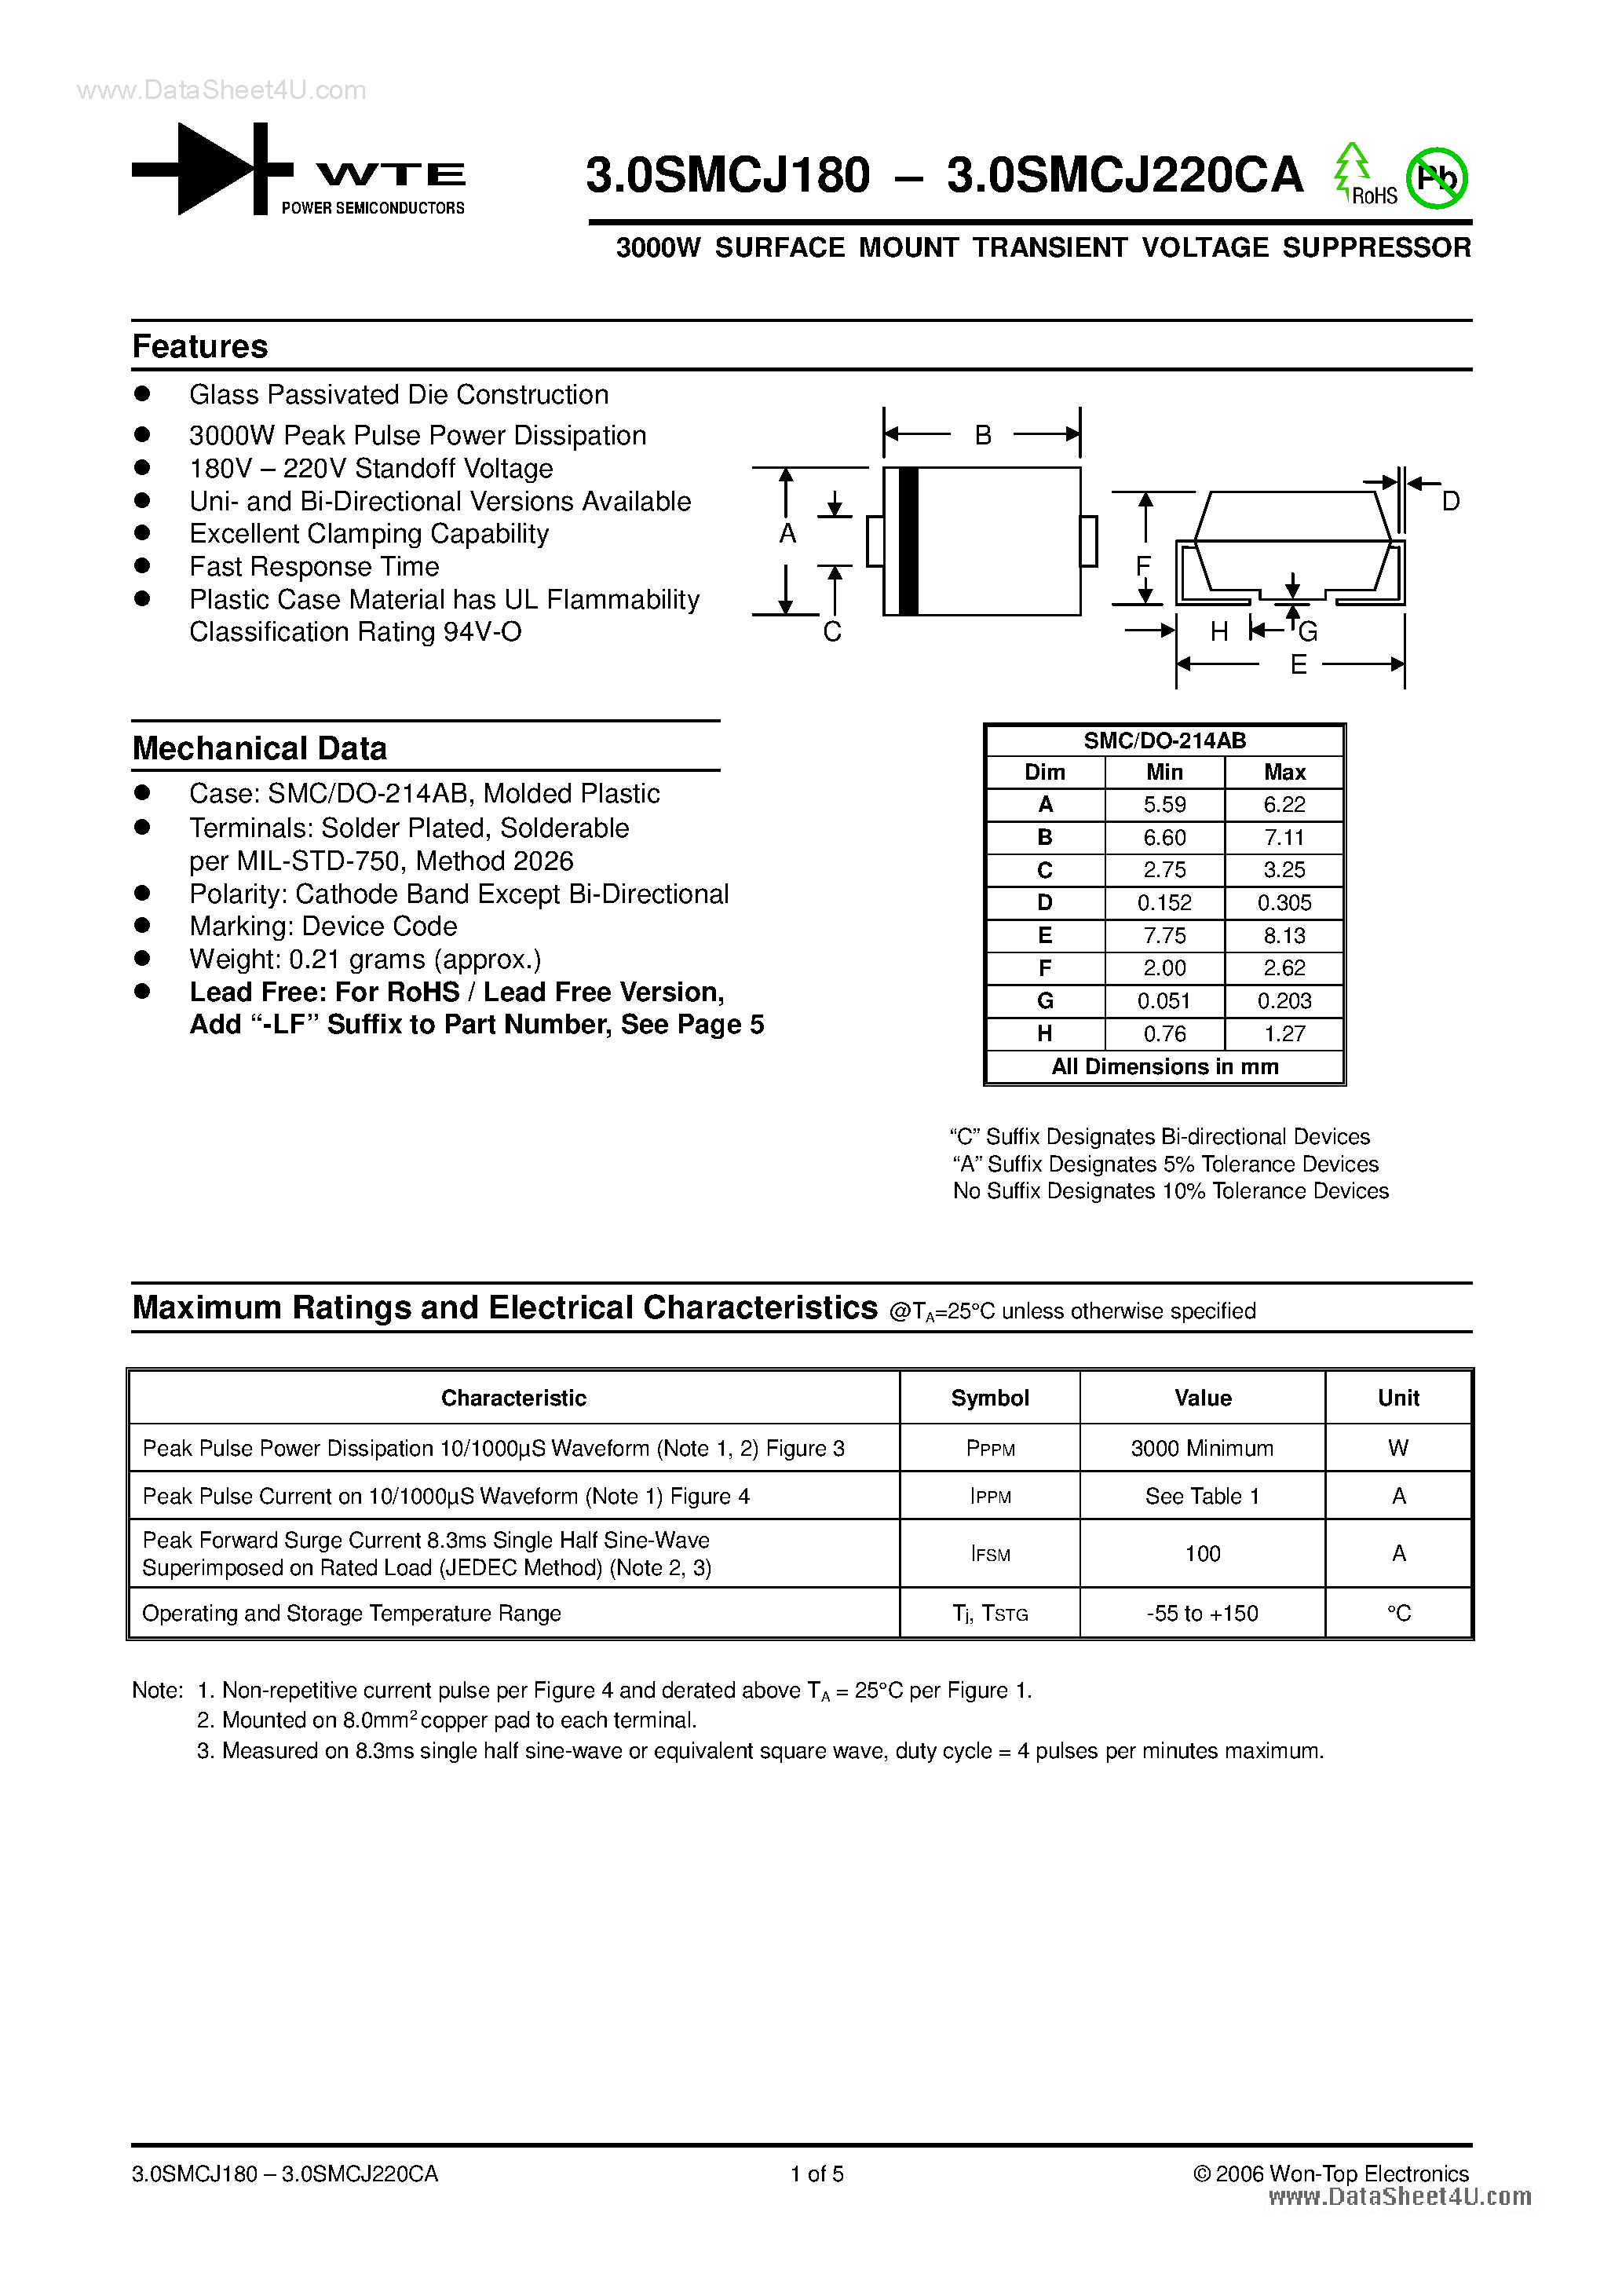 Datasheet 3.0SMCJ180 - (3.0SMCJ180 - 3.0SMCJ220CA) 3000W SURFACE MOUNT TRANSIENT VOLTAGE SUPPRESSOR page 1